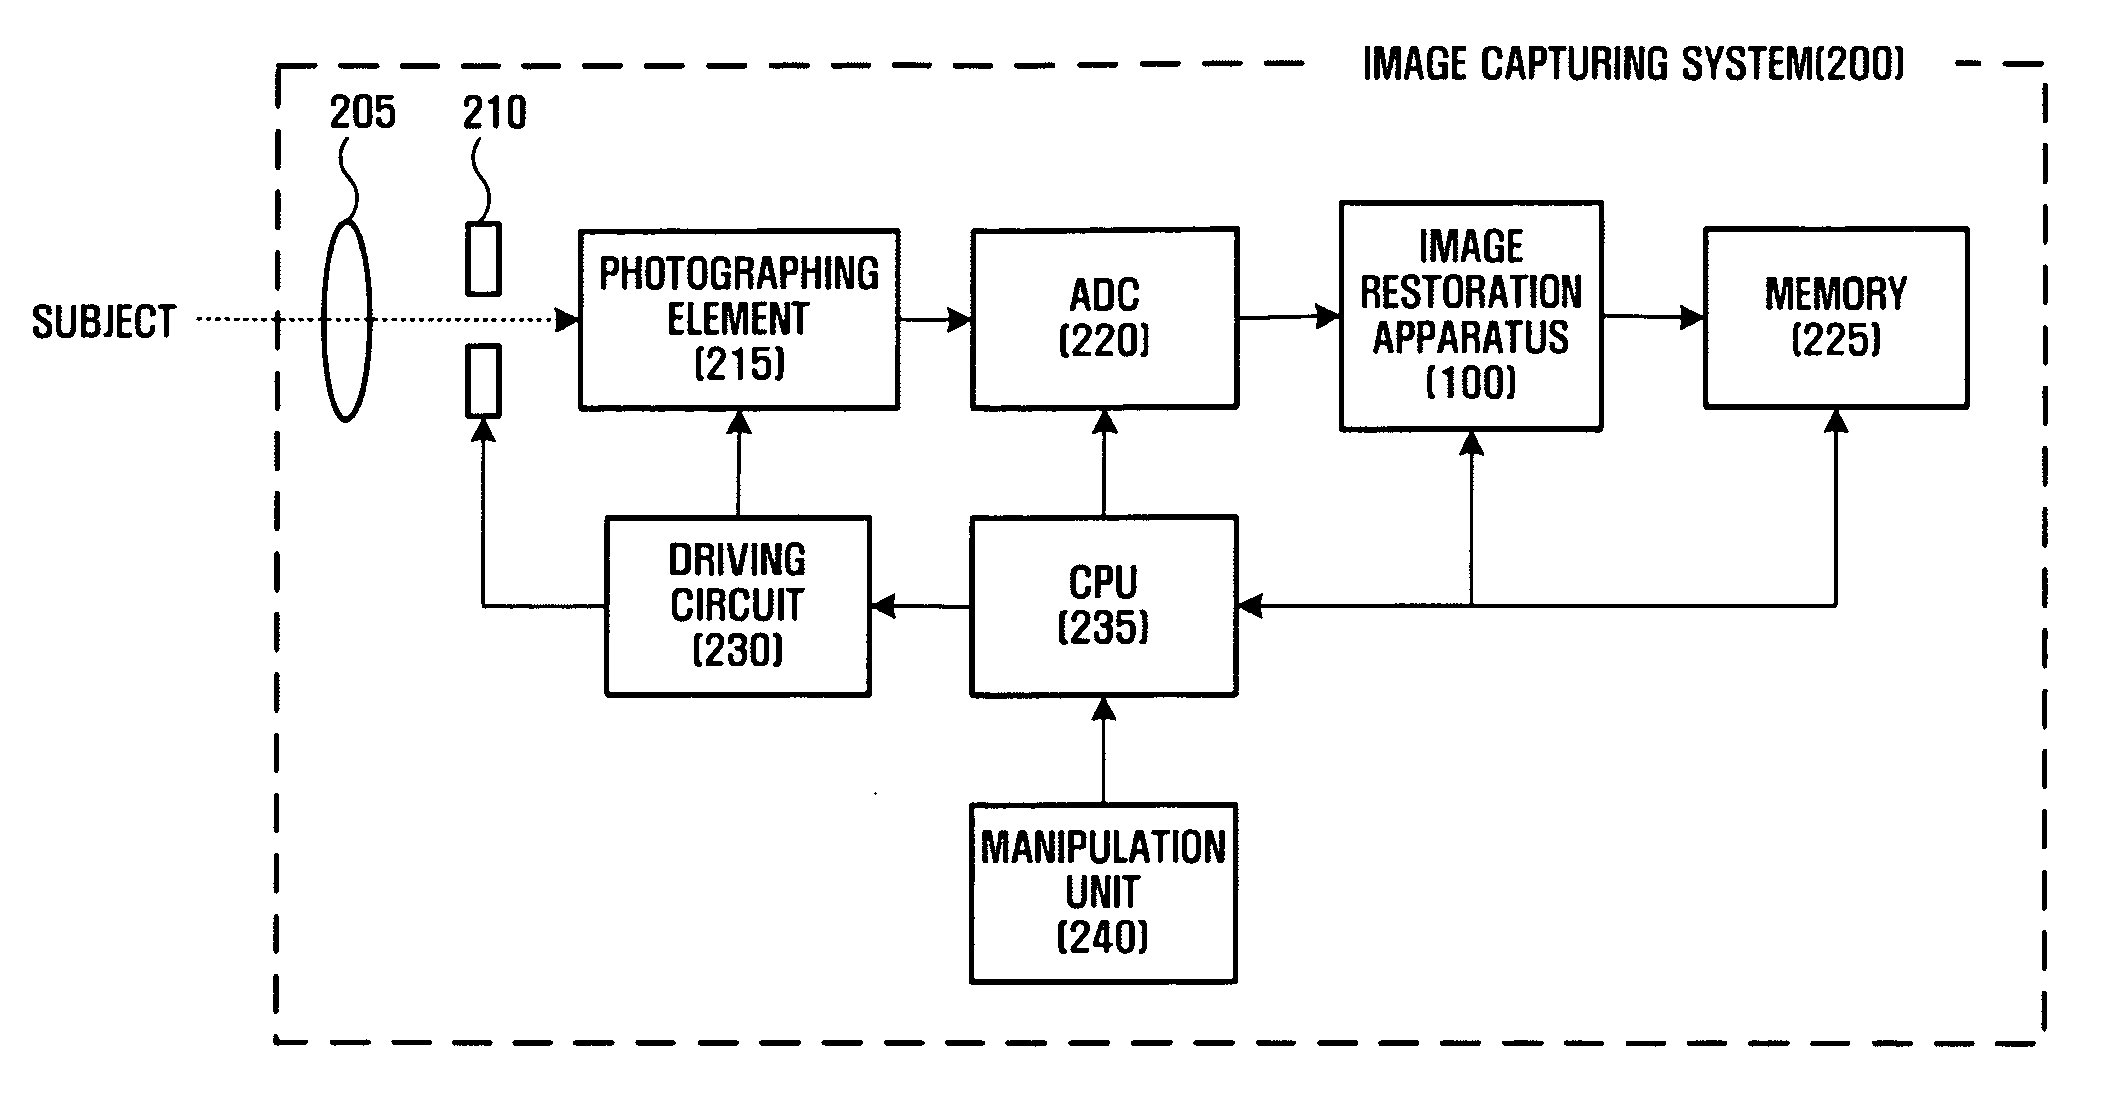 Image restoration apparatus and method